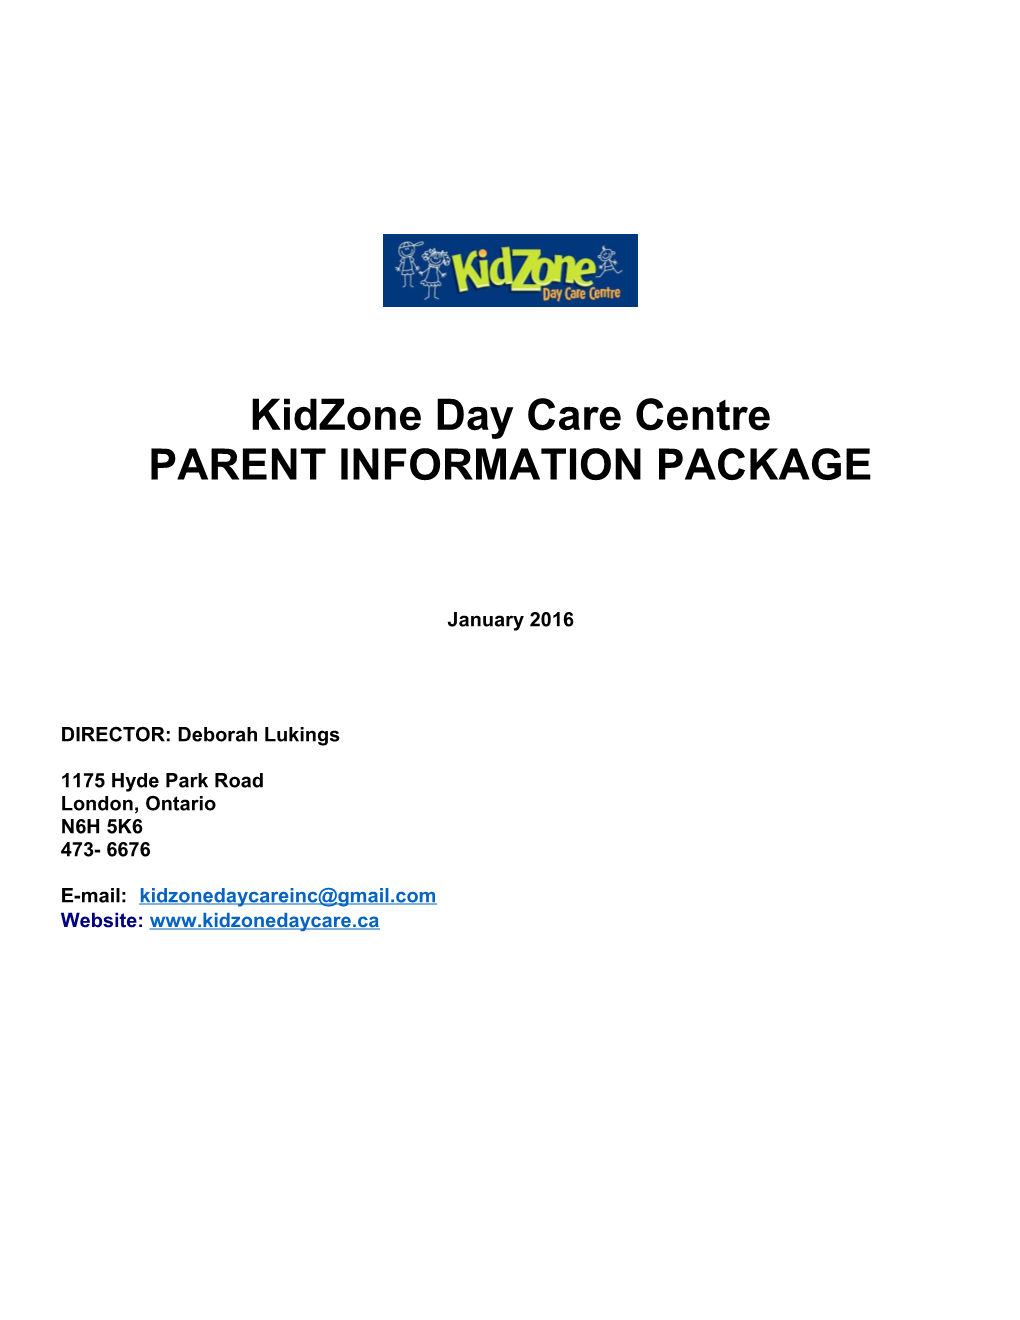 Kidzone Day Care Centre